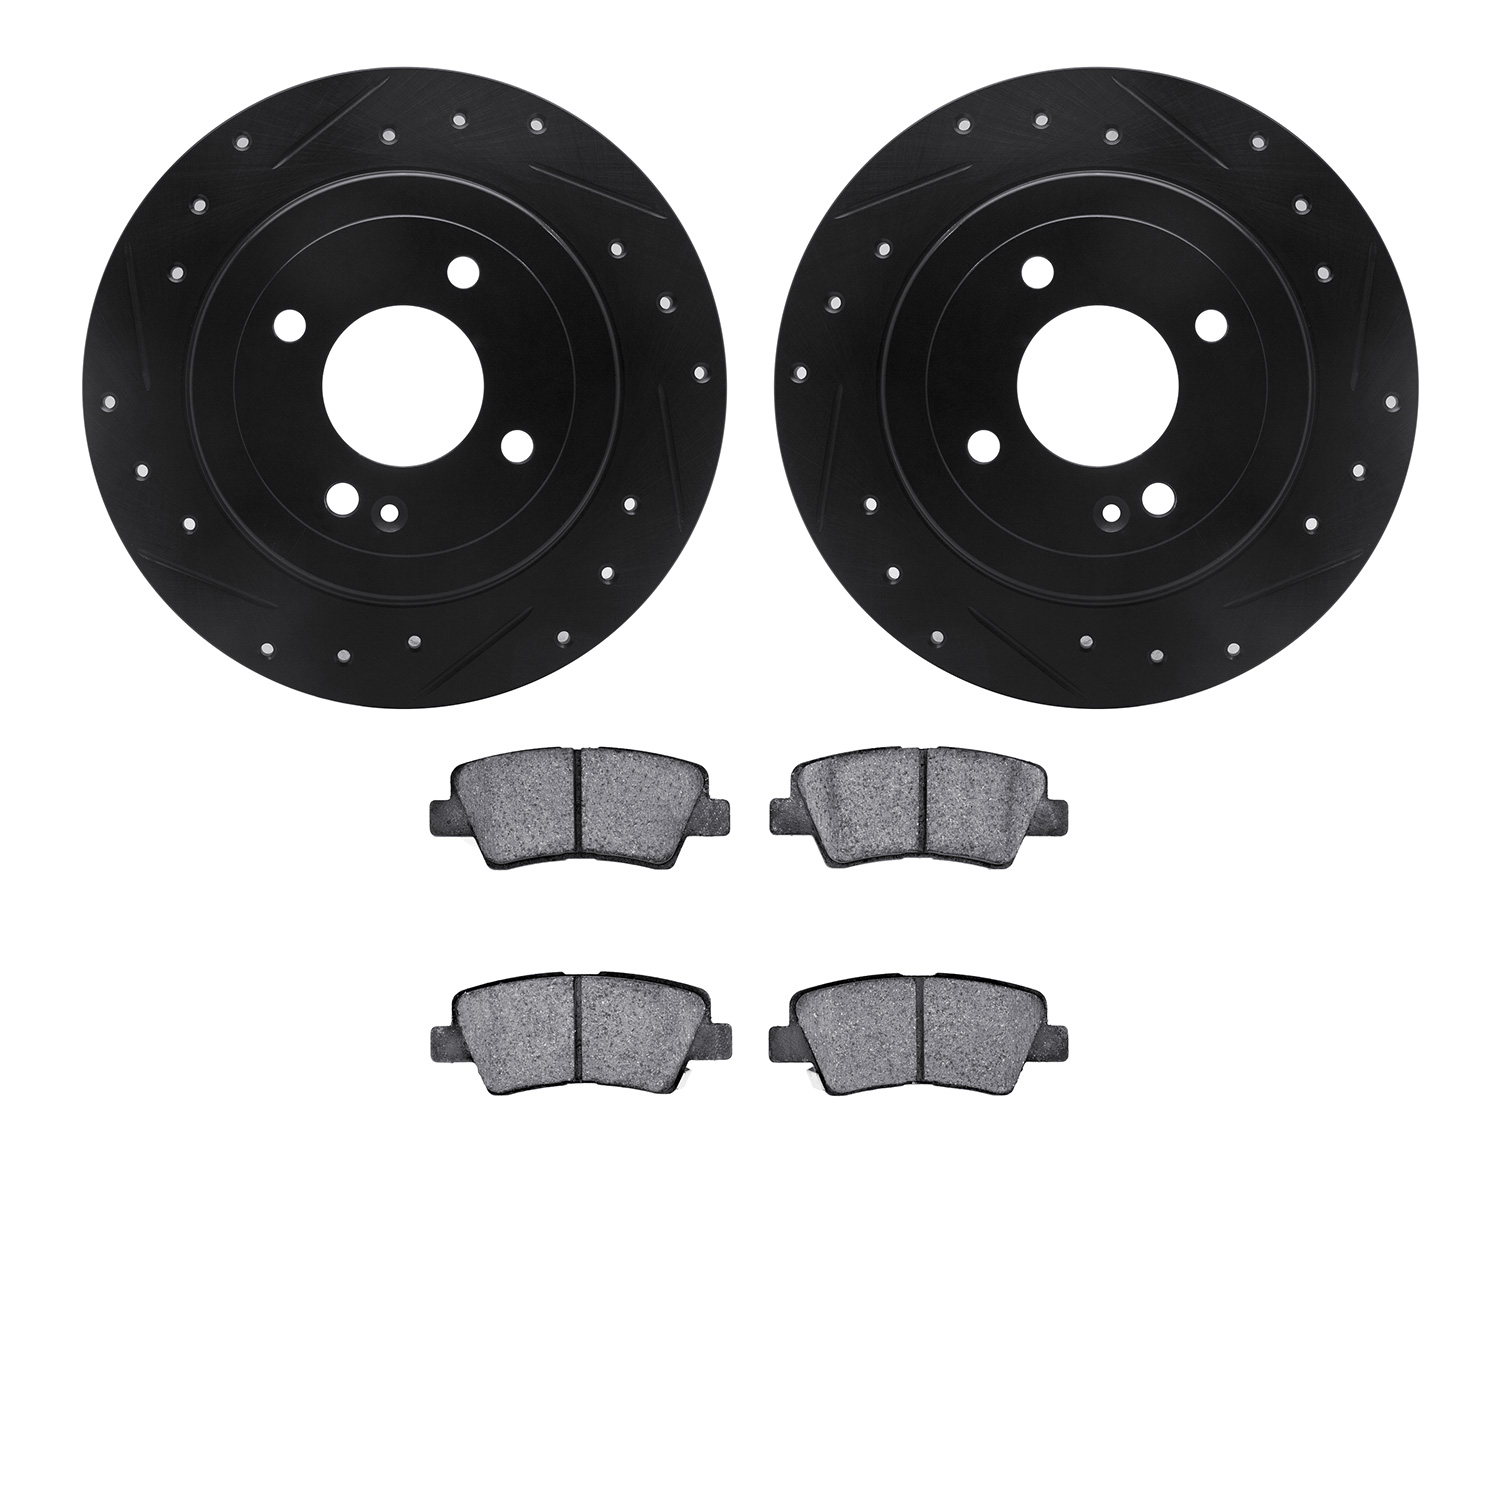 8302-03077 Drilled/Slotted Brake Rotors with 3000-Series Ceramic Brake Pads Kit [Black], Fits Select Multiple Makes/Models, Posi